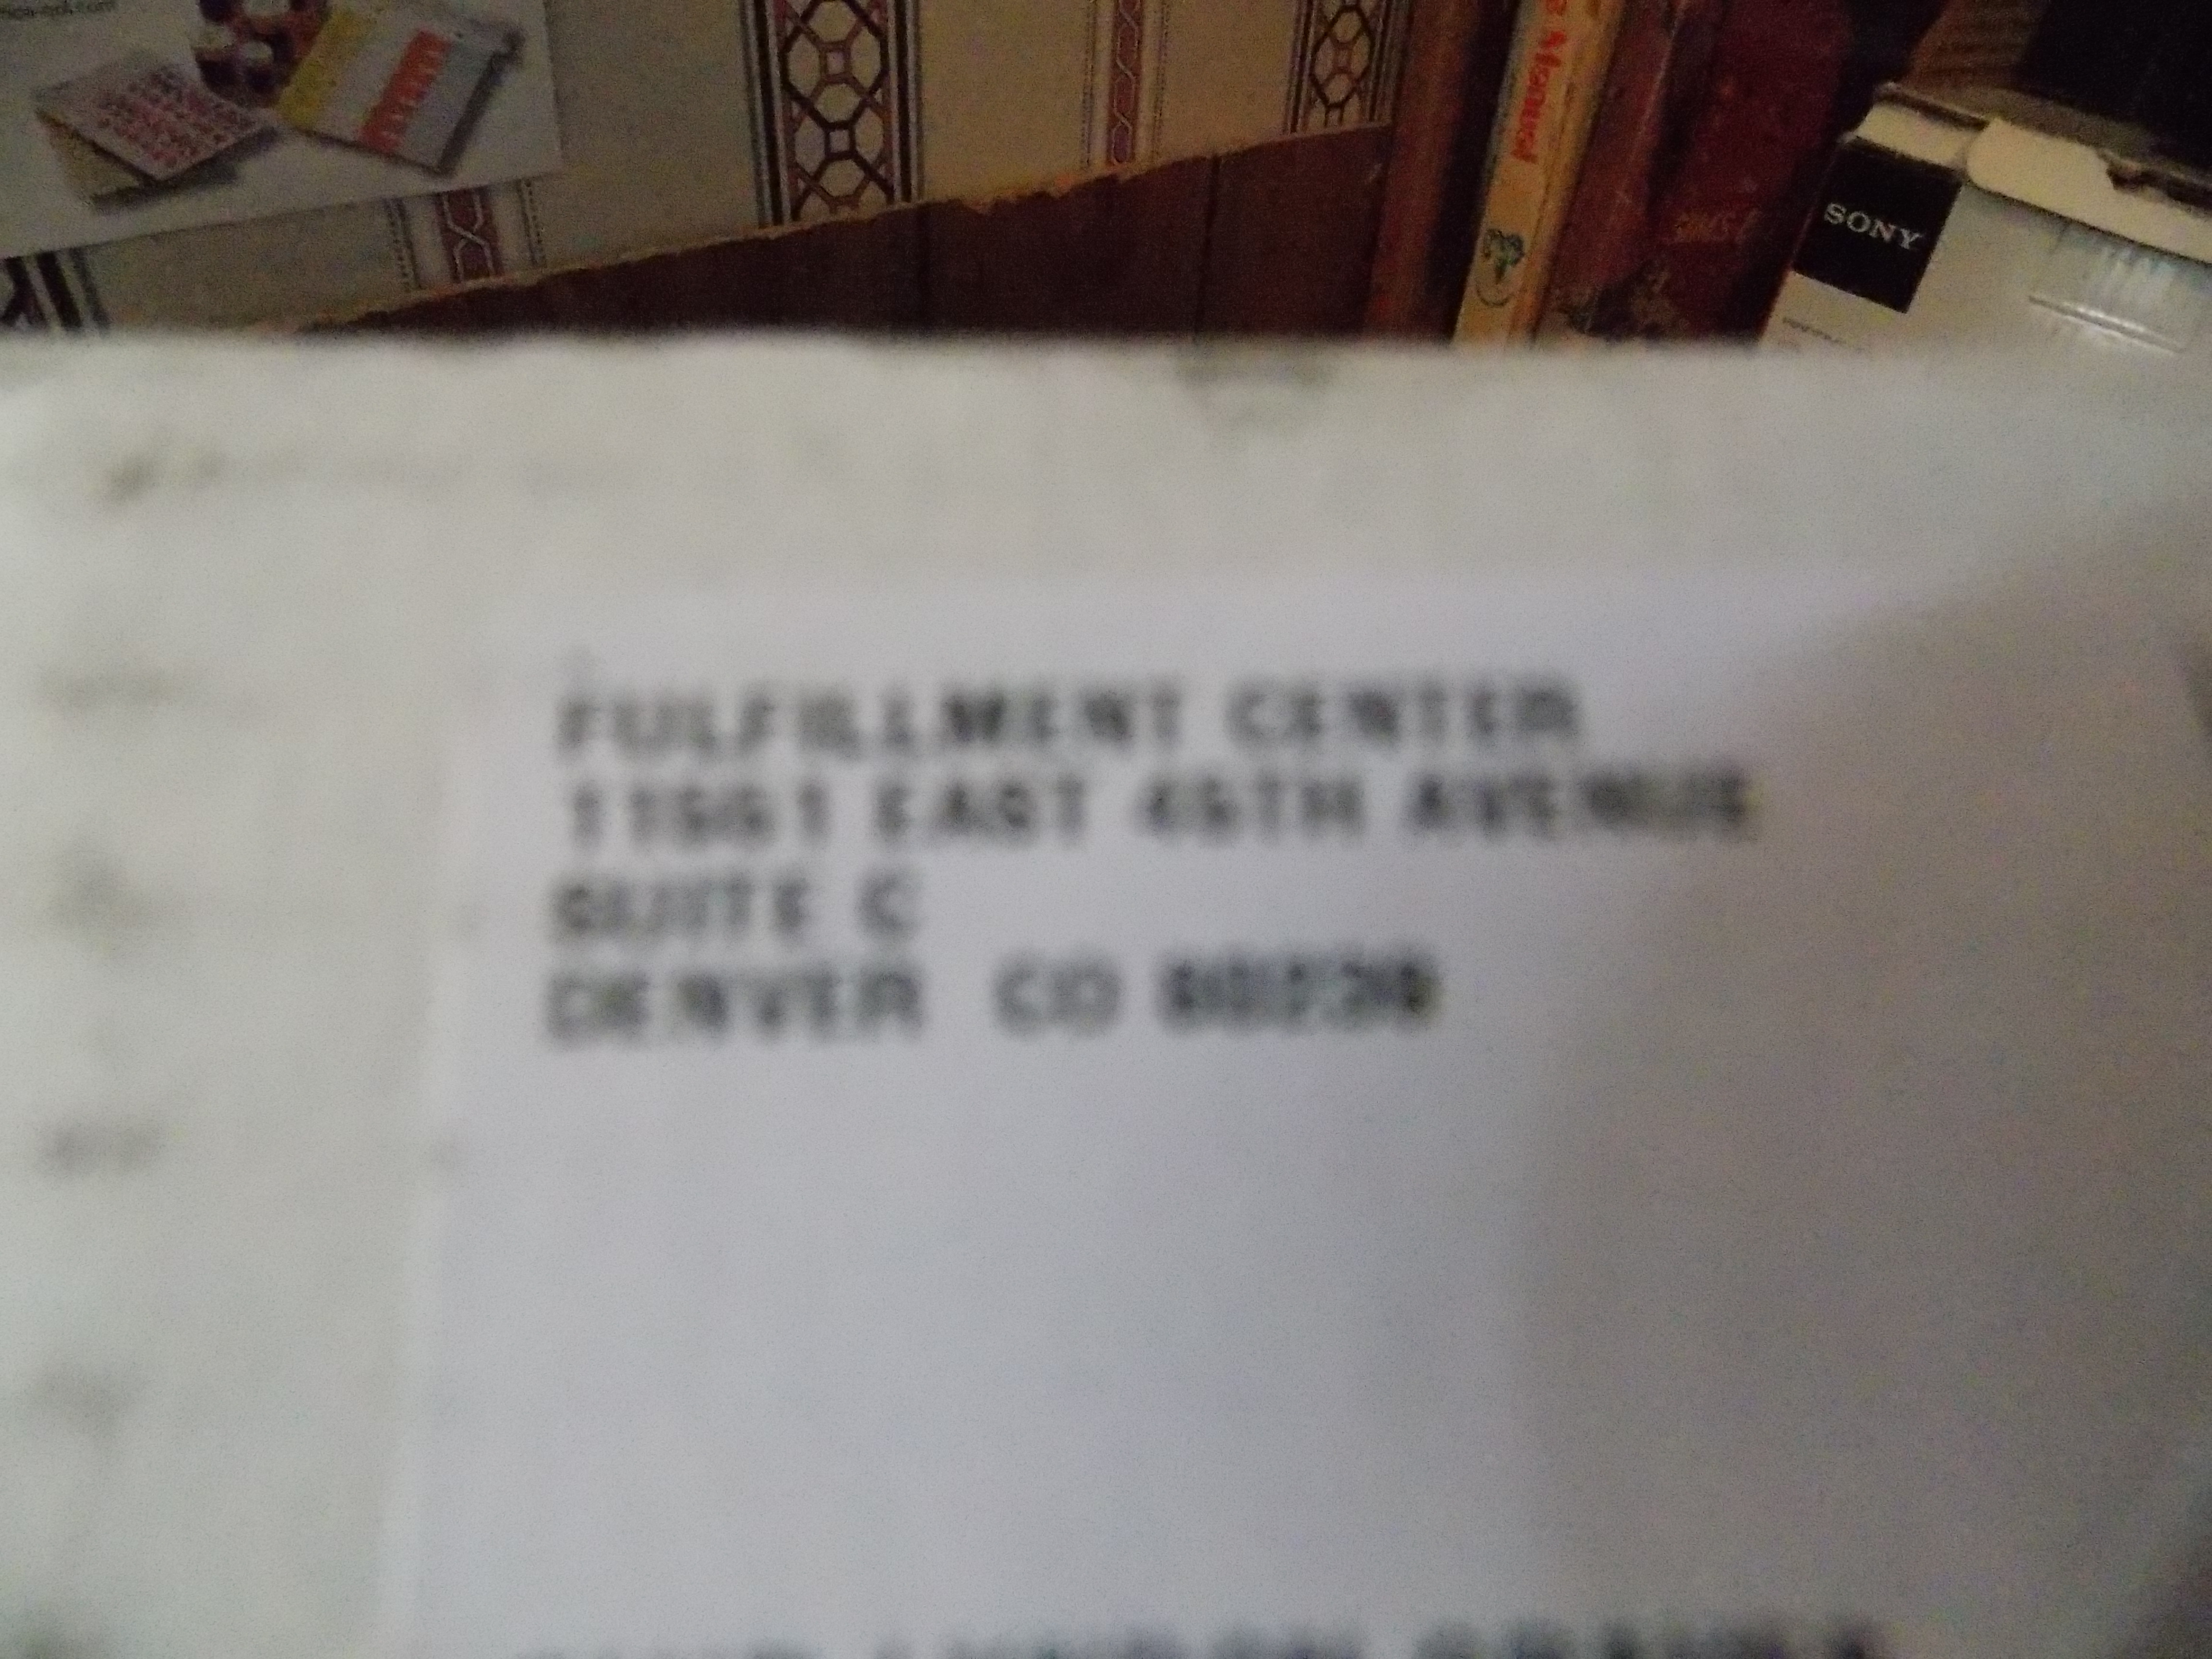 Shipping address in Denver, CO